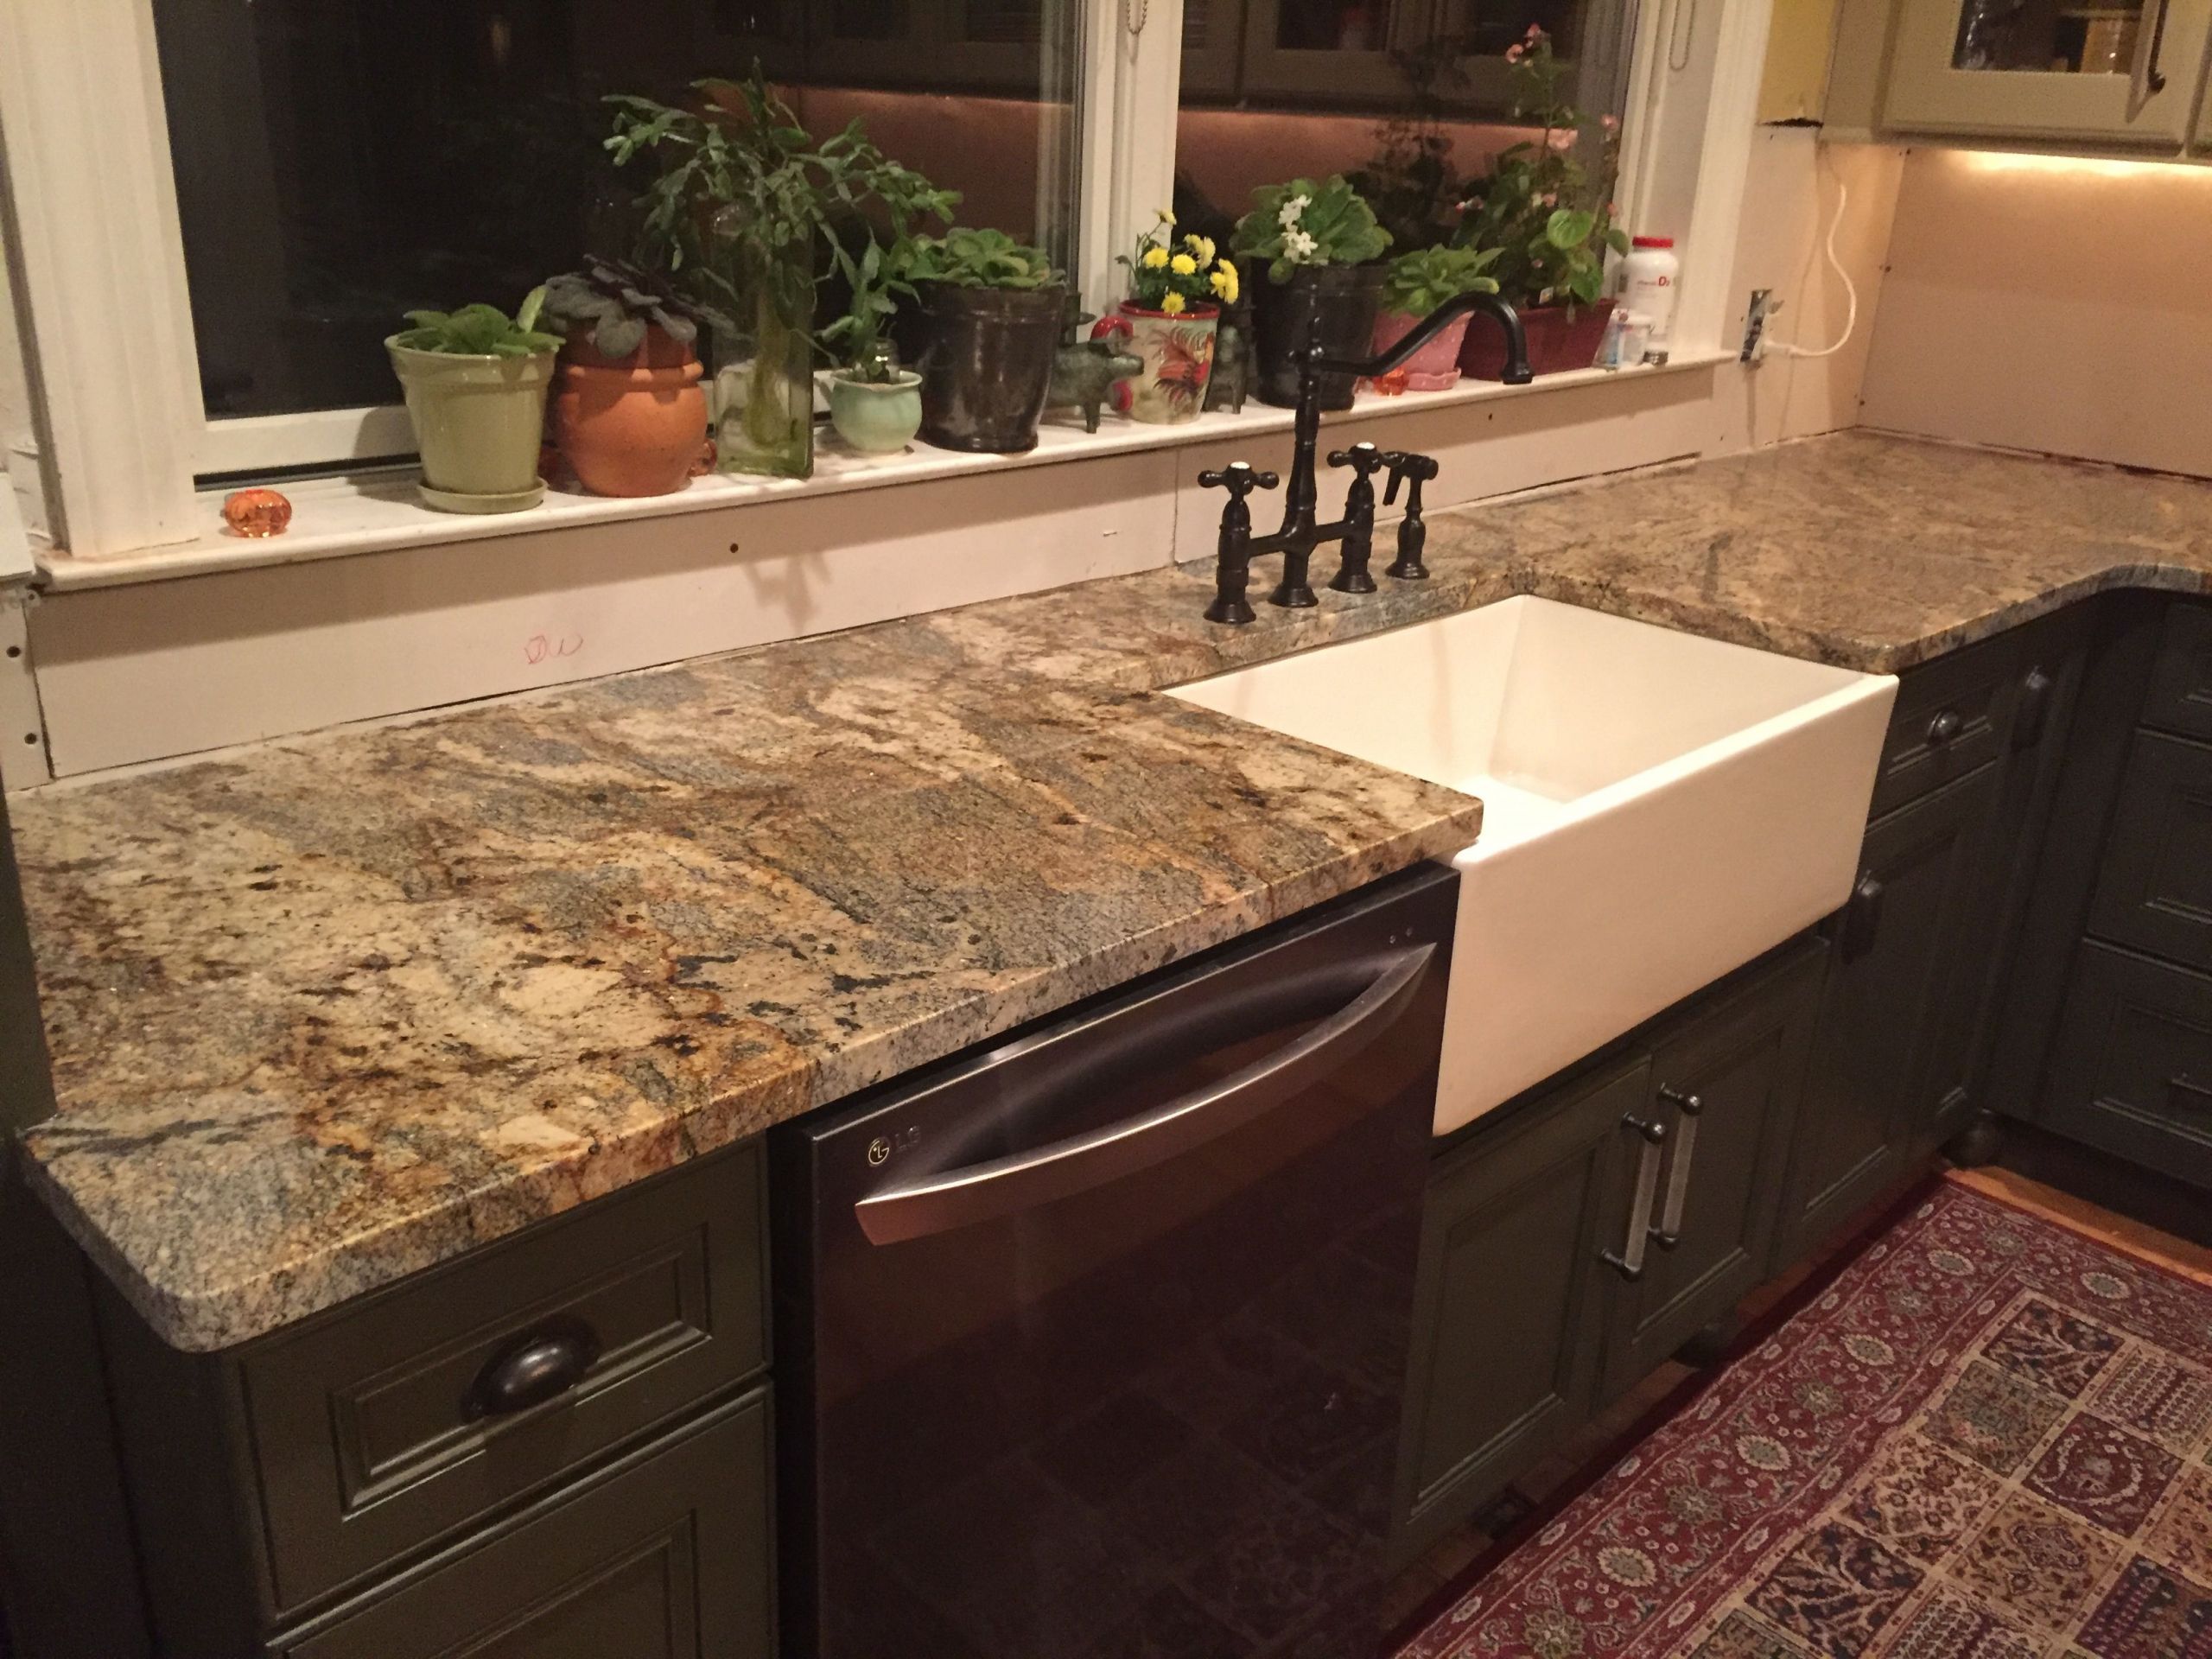 Kitchen Countertops Lowes
 New granite countertop Lapidus Gold Lowe s Sensa lowes